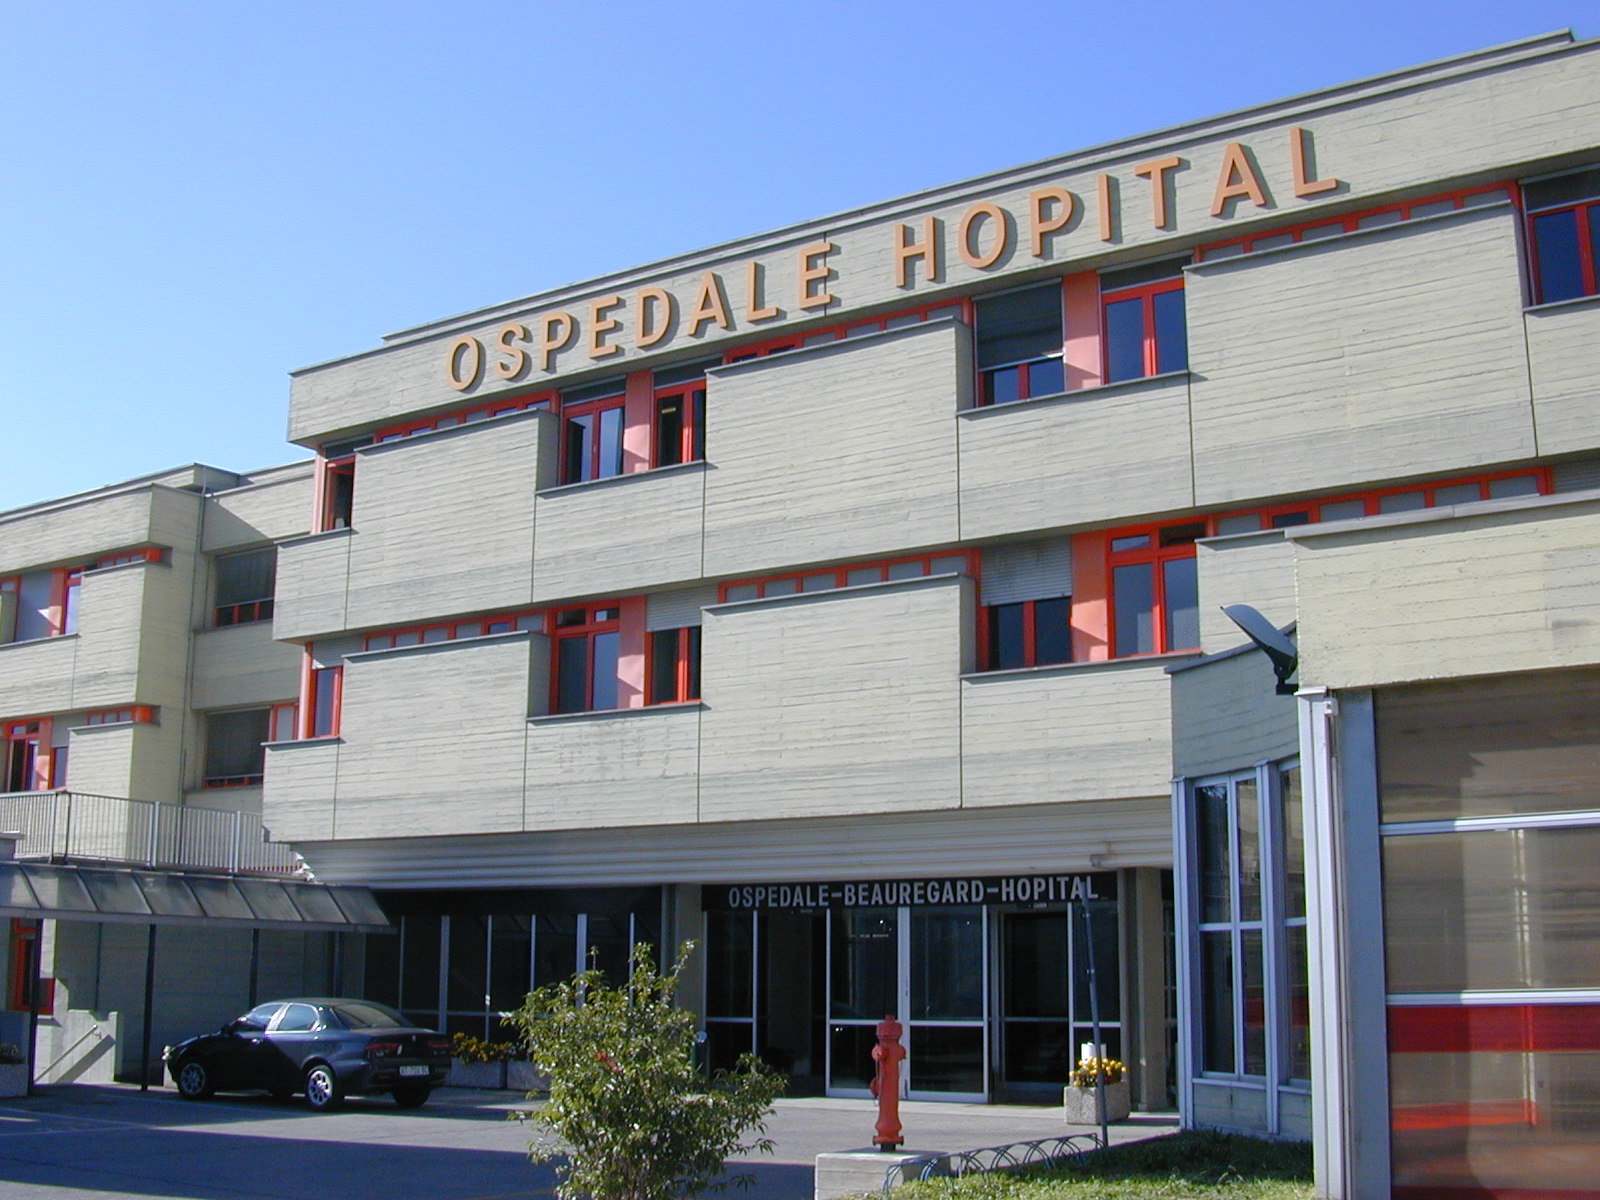 L’Ospedale Beauregard